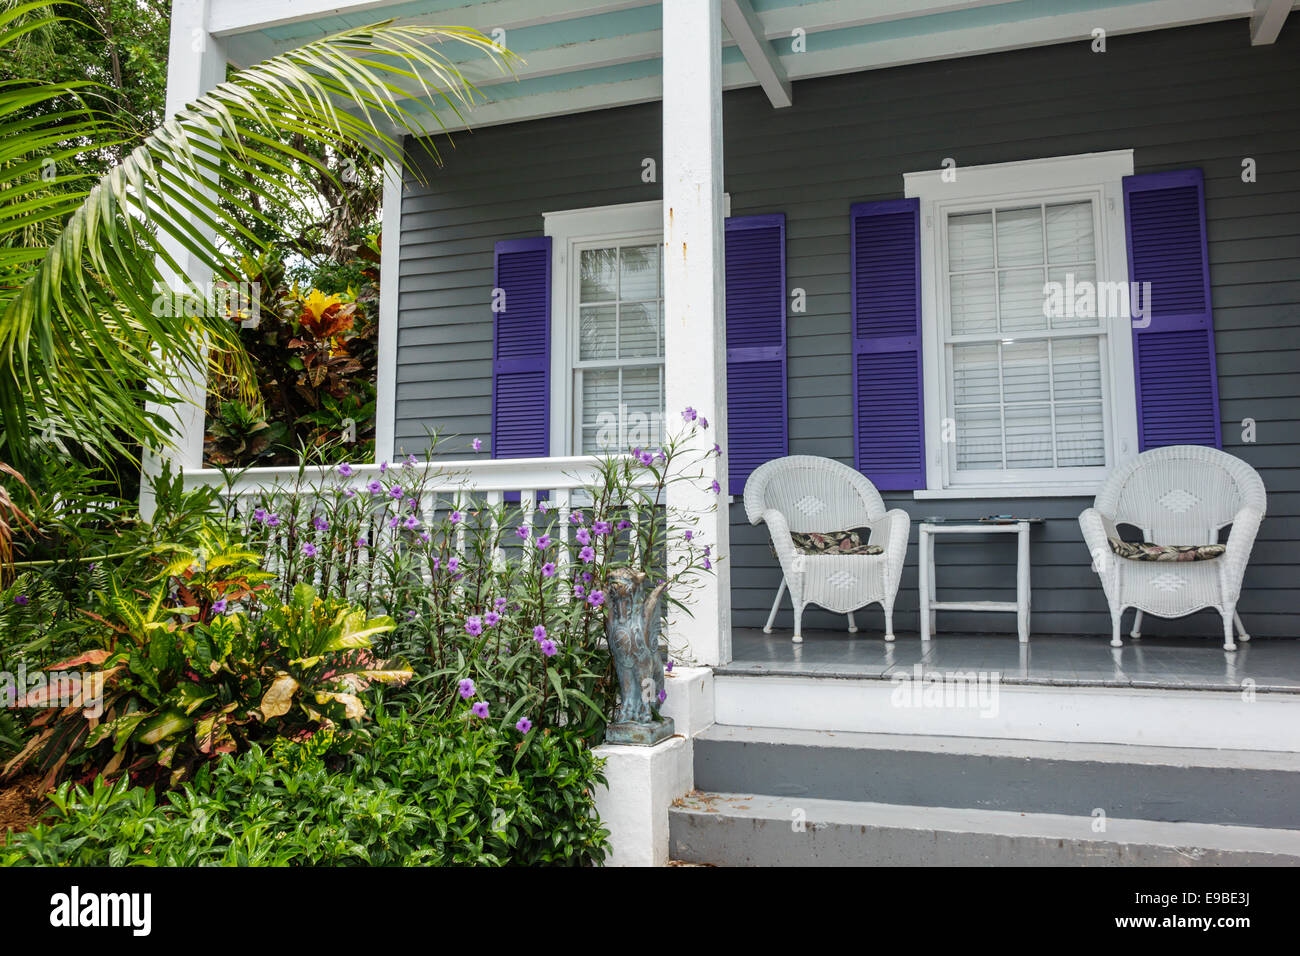 Key West Florida, Keys Fleming & Elizabeth Street, Haushäuser Häuser Häuser Häuser Residenz, Haus, private Residenz, Veranda, Stühle, tropische Landschaftsgestaltung veg Stockfoto